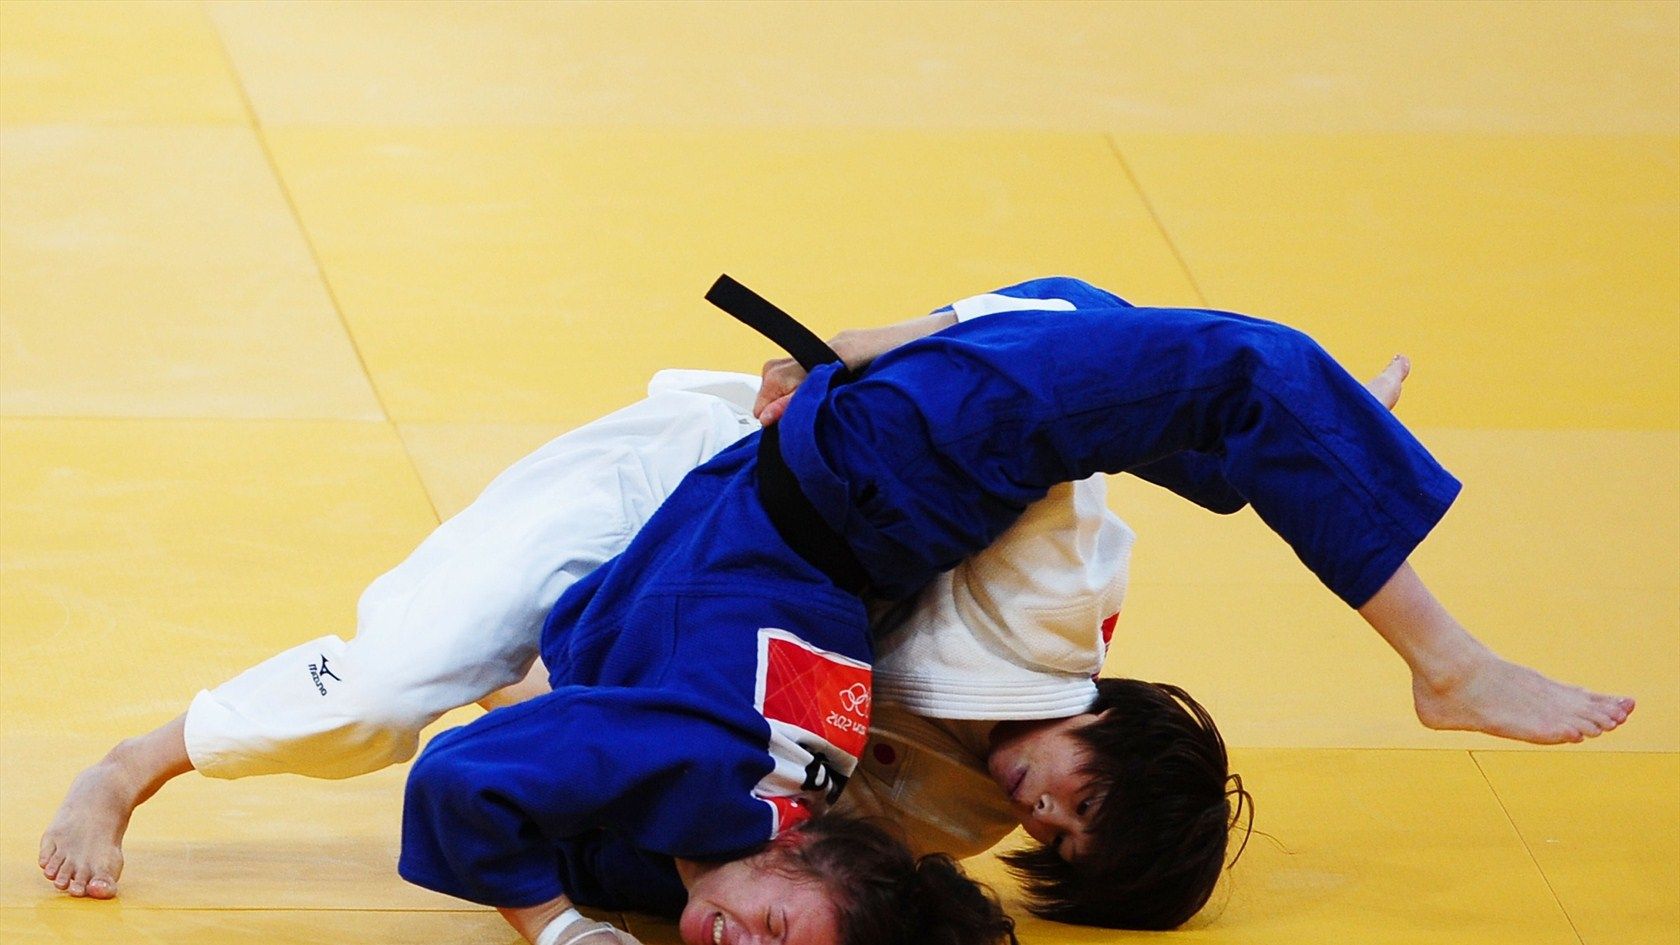 Judo' Poster by Cornel Vlad | Displate